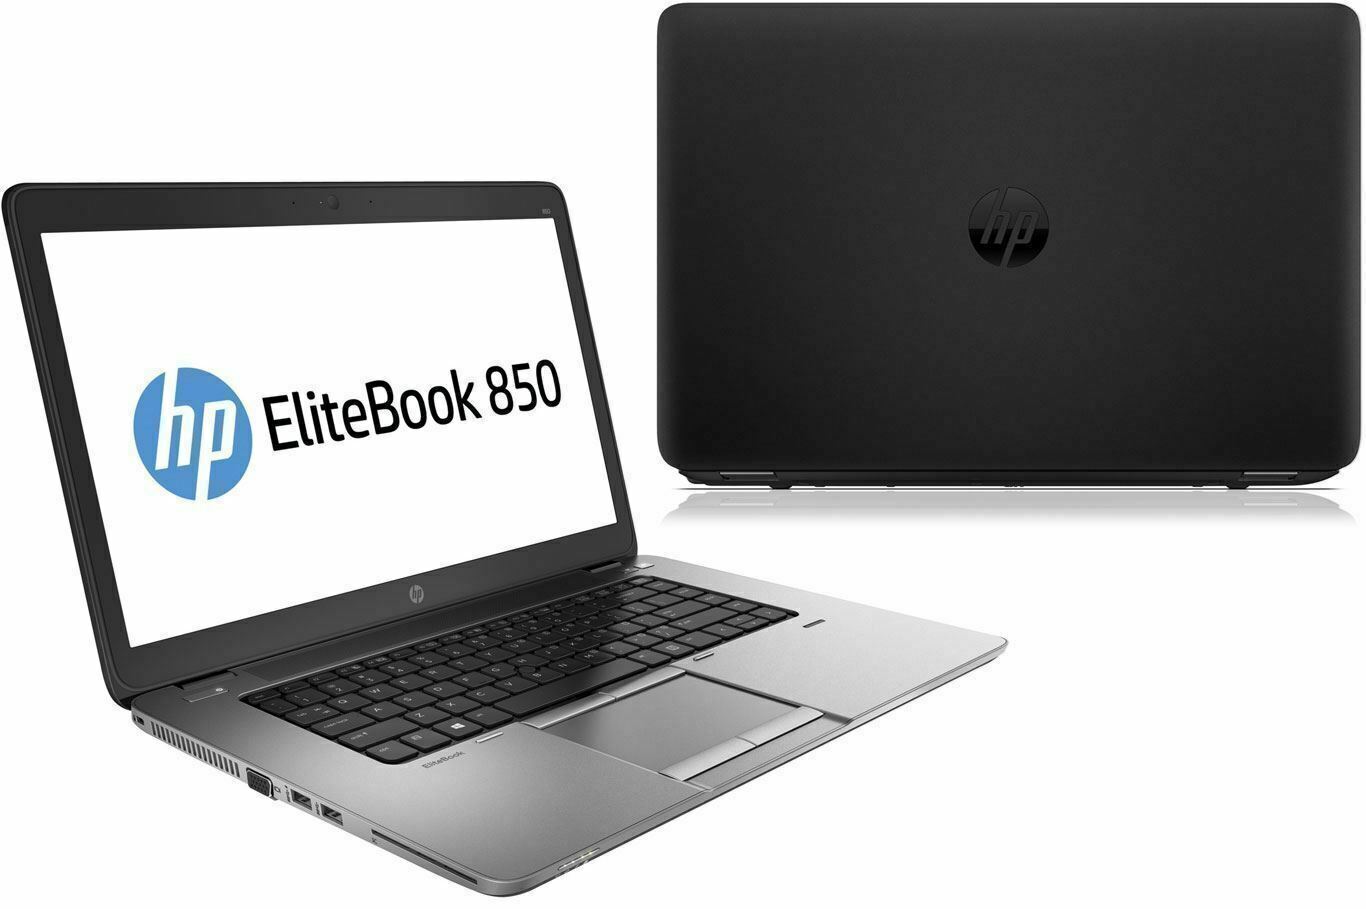 HP EliteBook 850 G1 Core i5-4th Generation Laptop Price in Pakistan ...